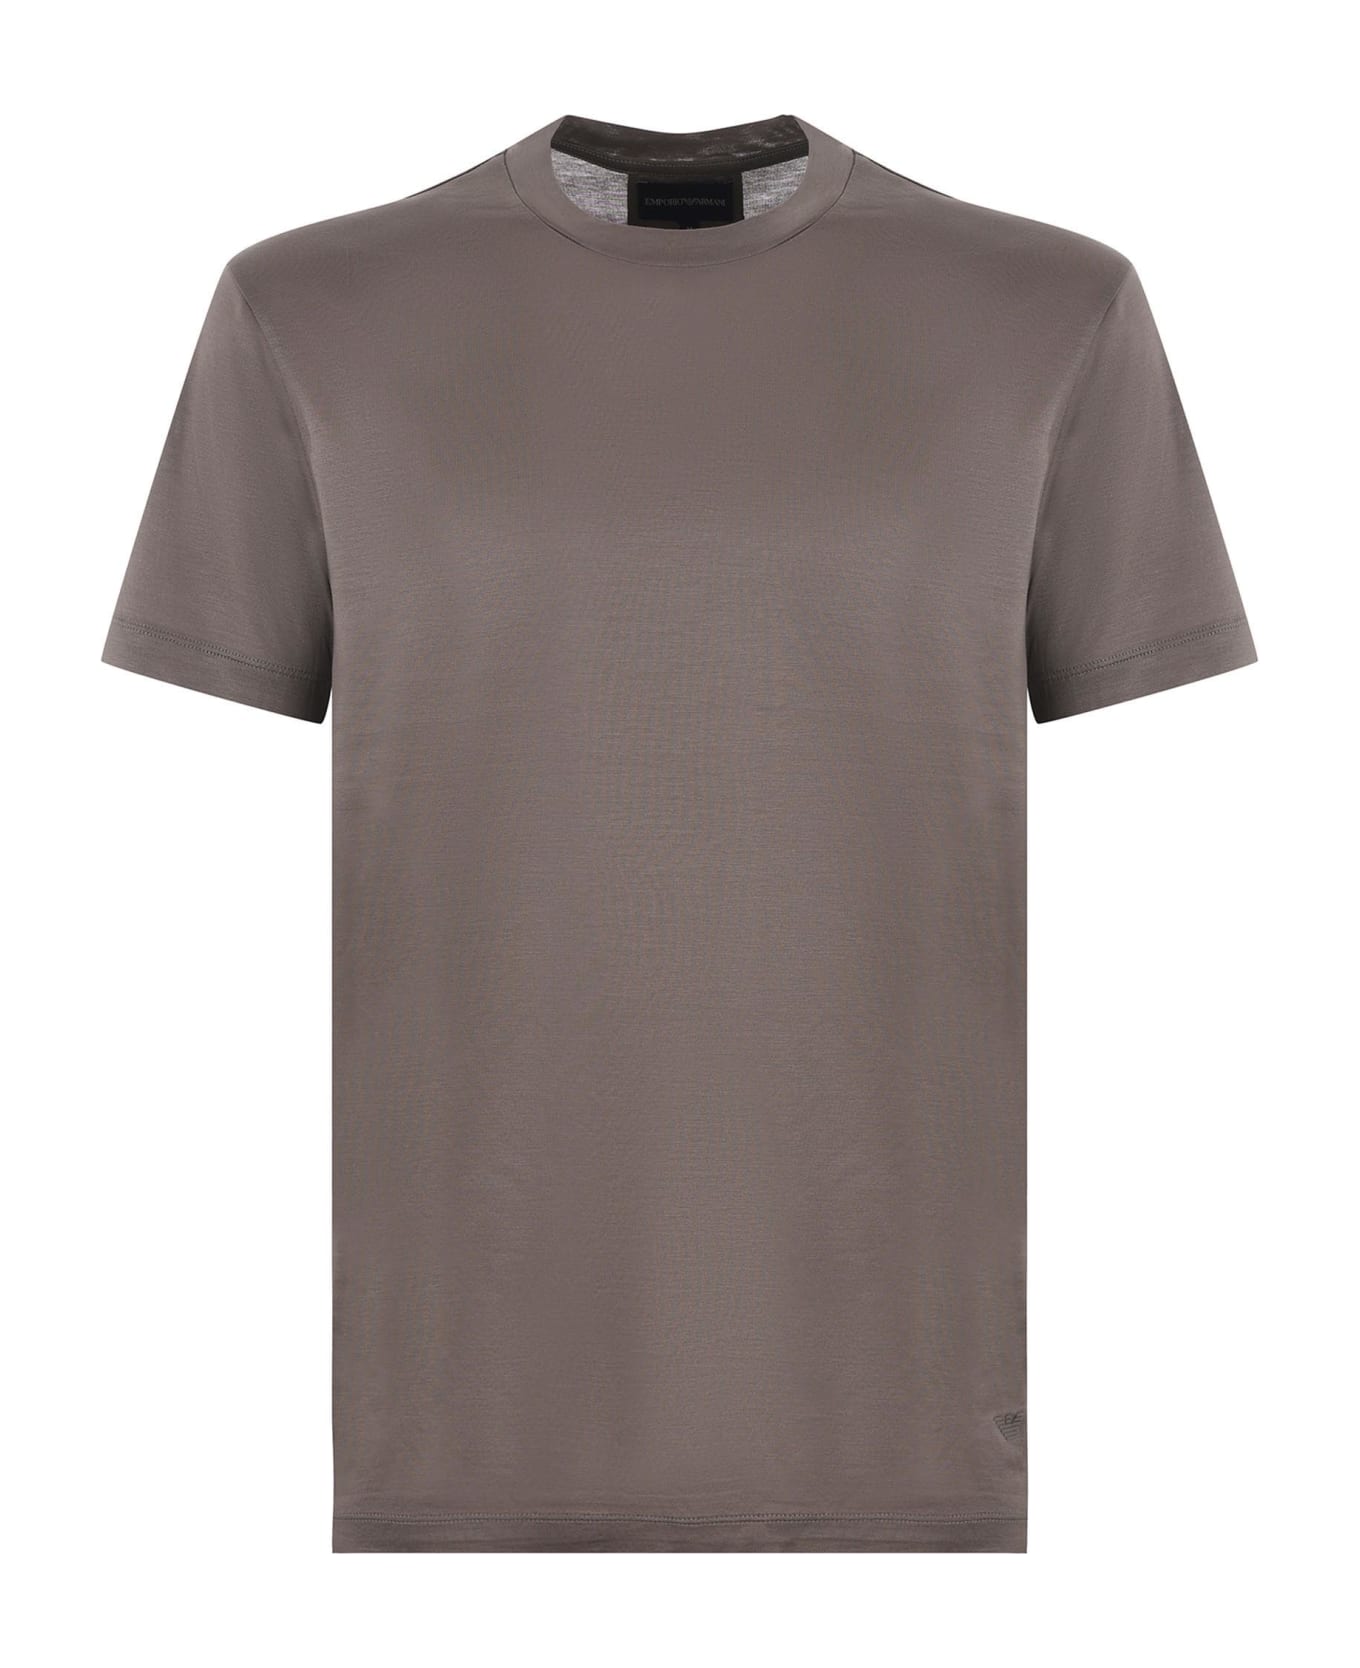 Emporio Armani T-shirt - Tortora scuro シャツ